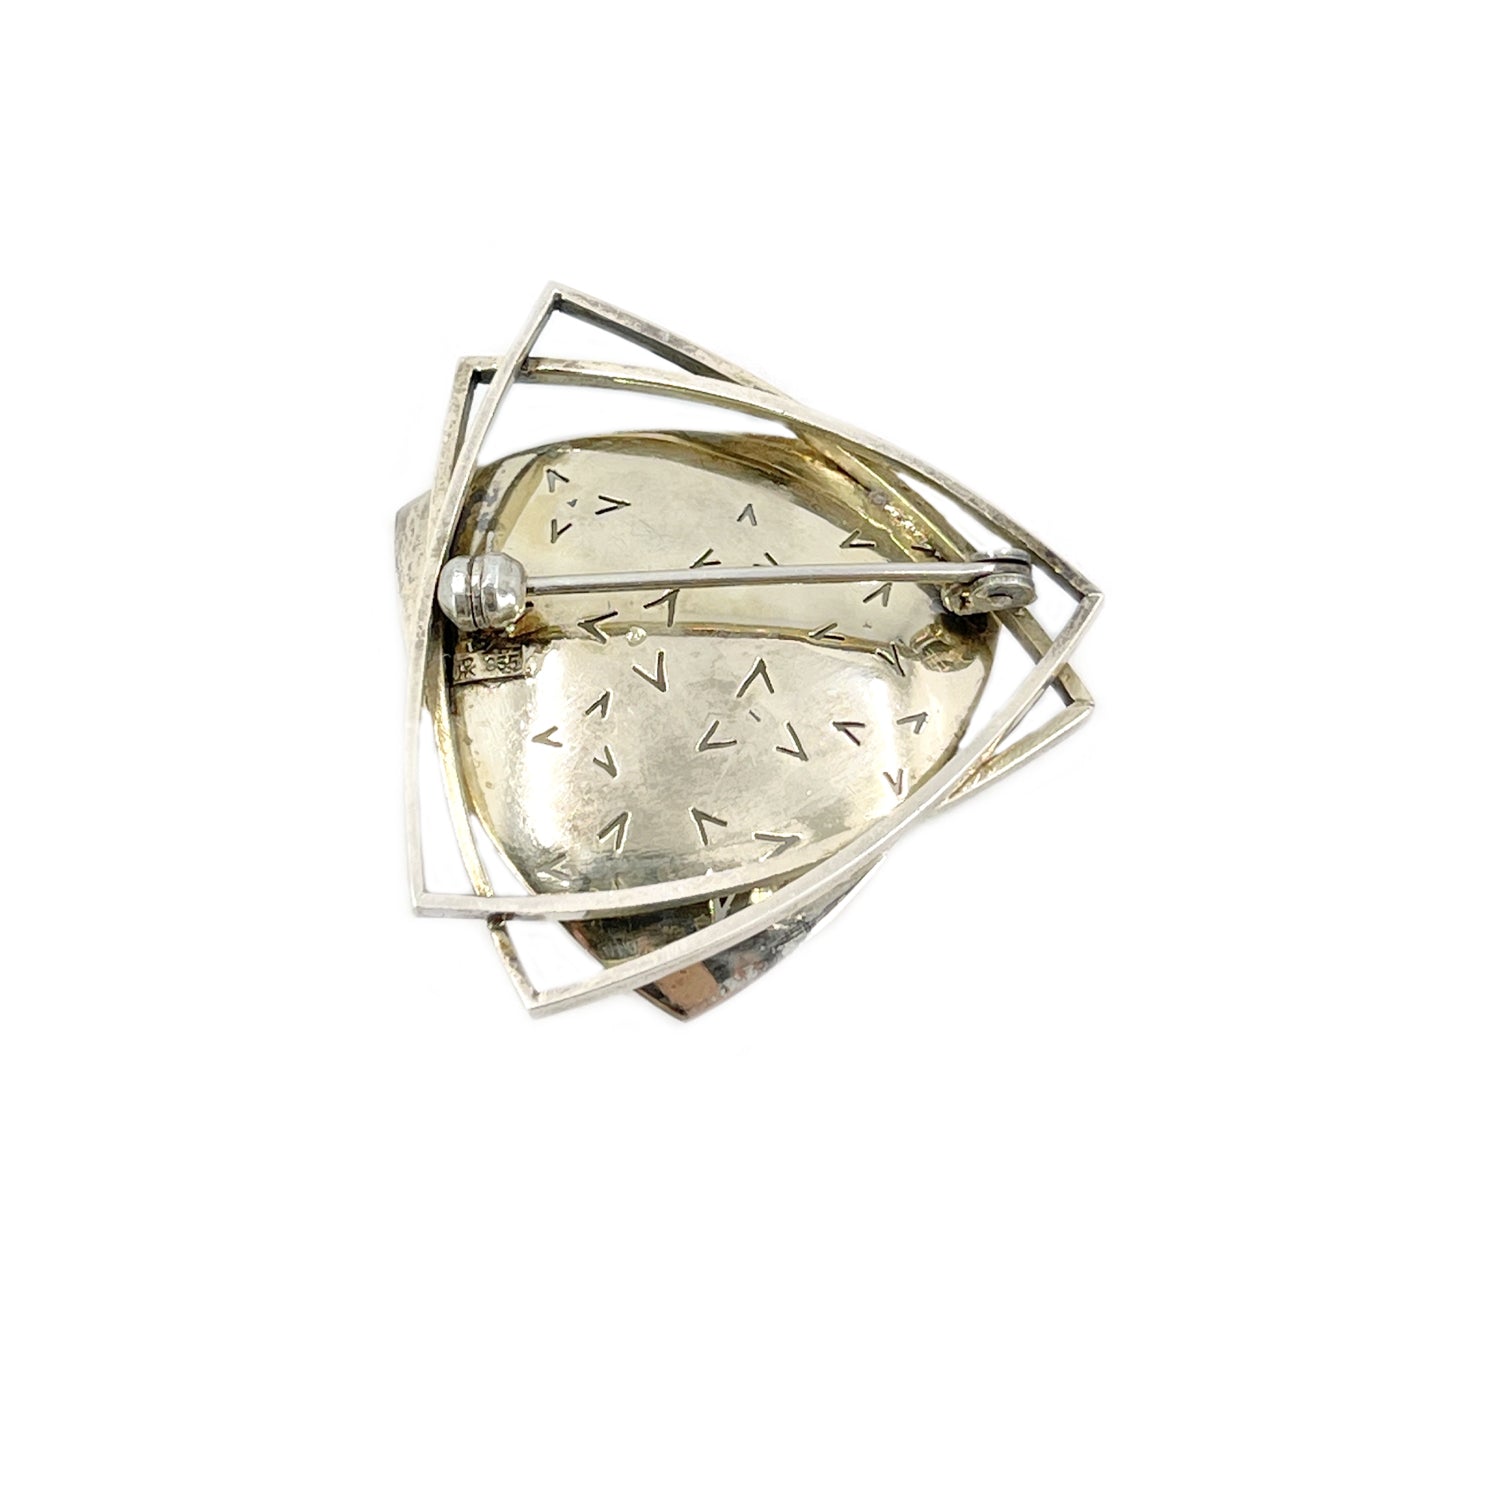 Atomic Era Modernist Japanese Saltwater Akoya Pearl Vintage Brooch- Sterling Silver